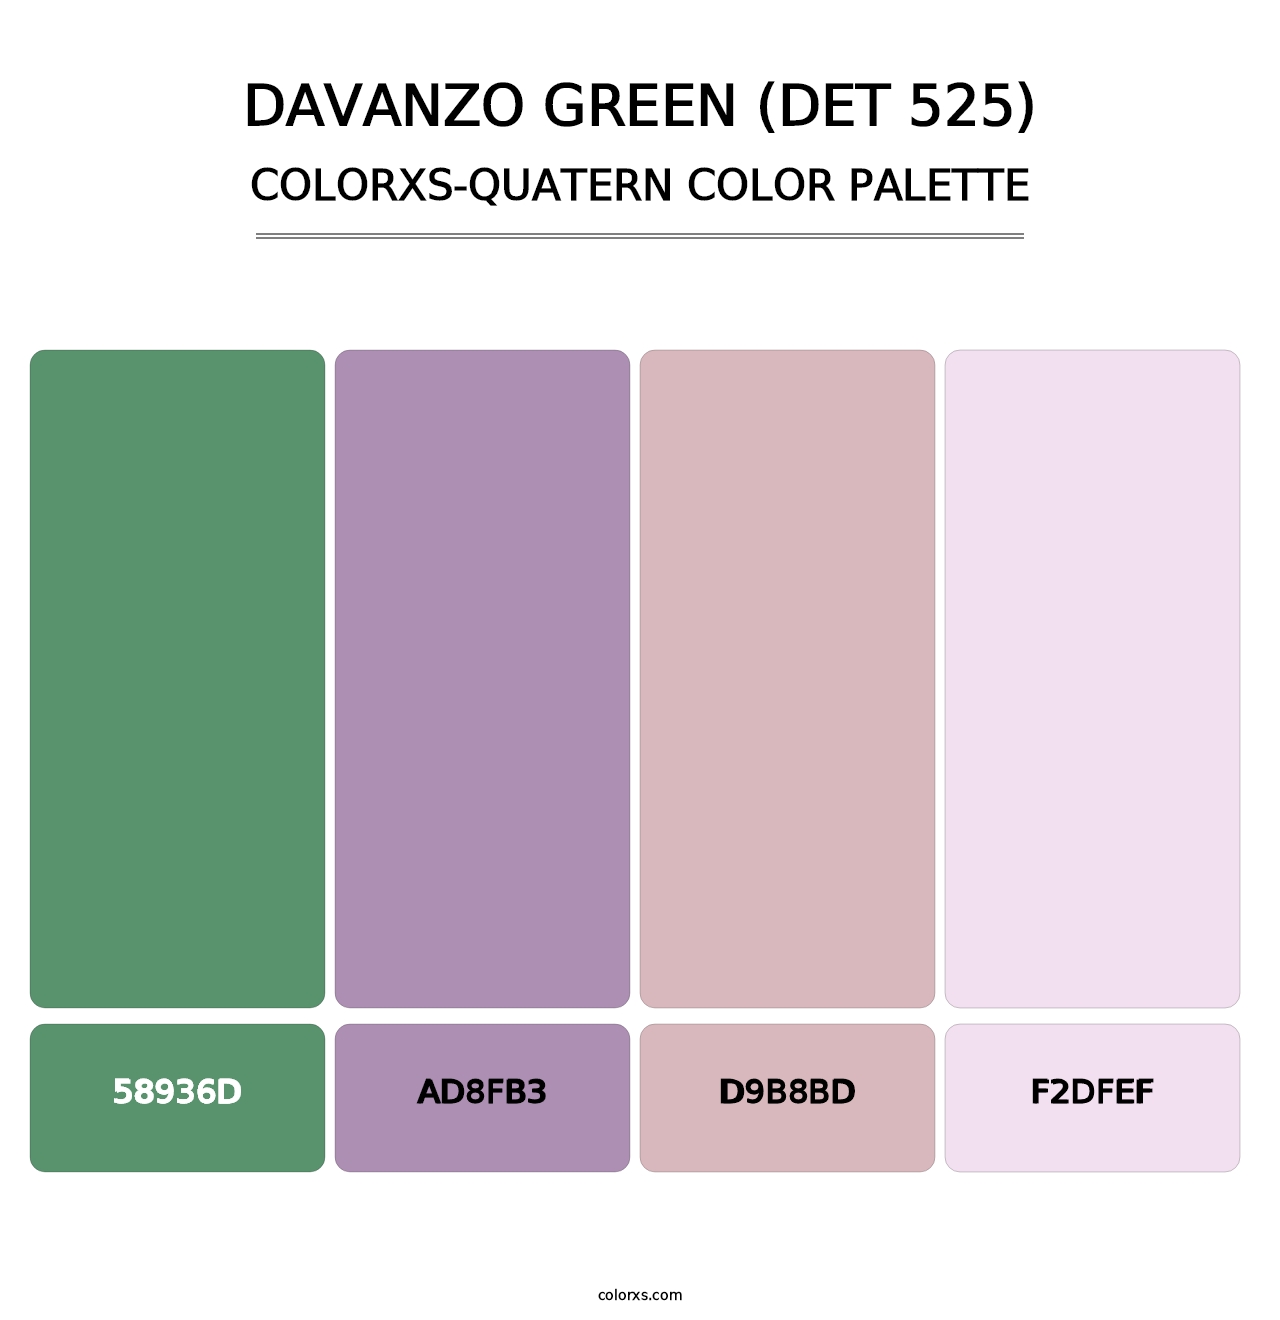 DaVanzo Green (DET 525) - Colorxs Quatern Palette